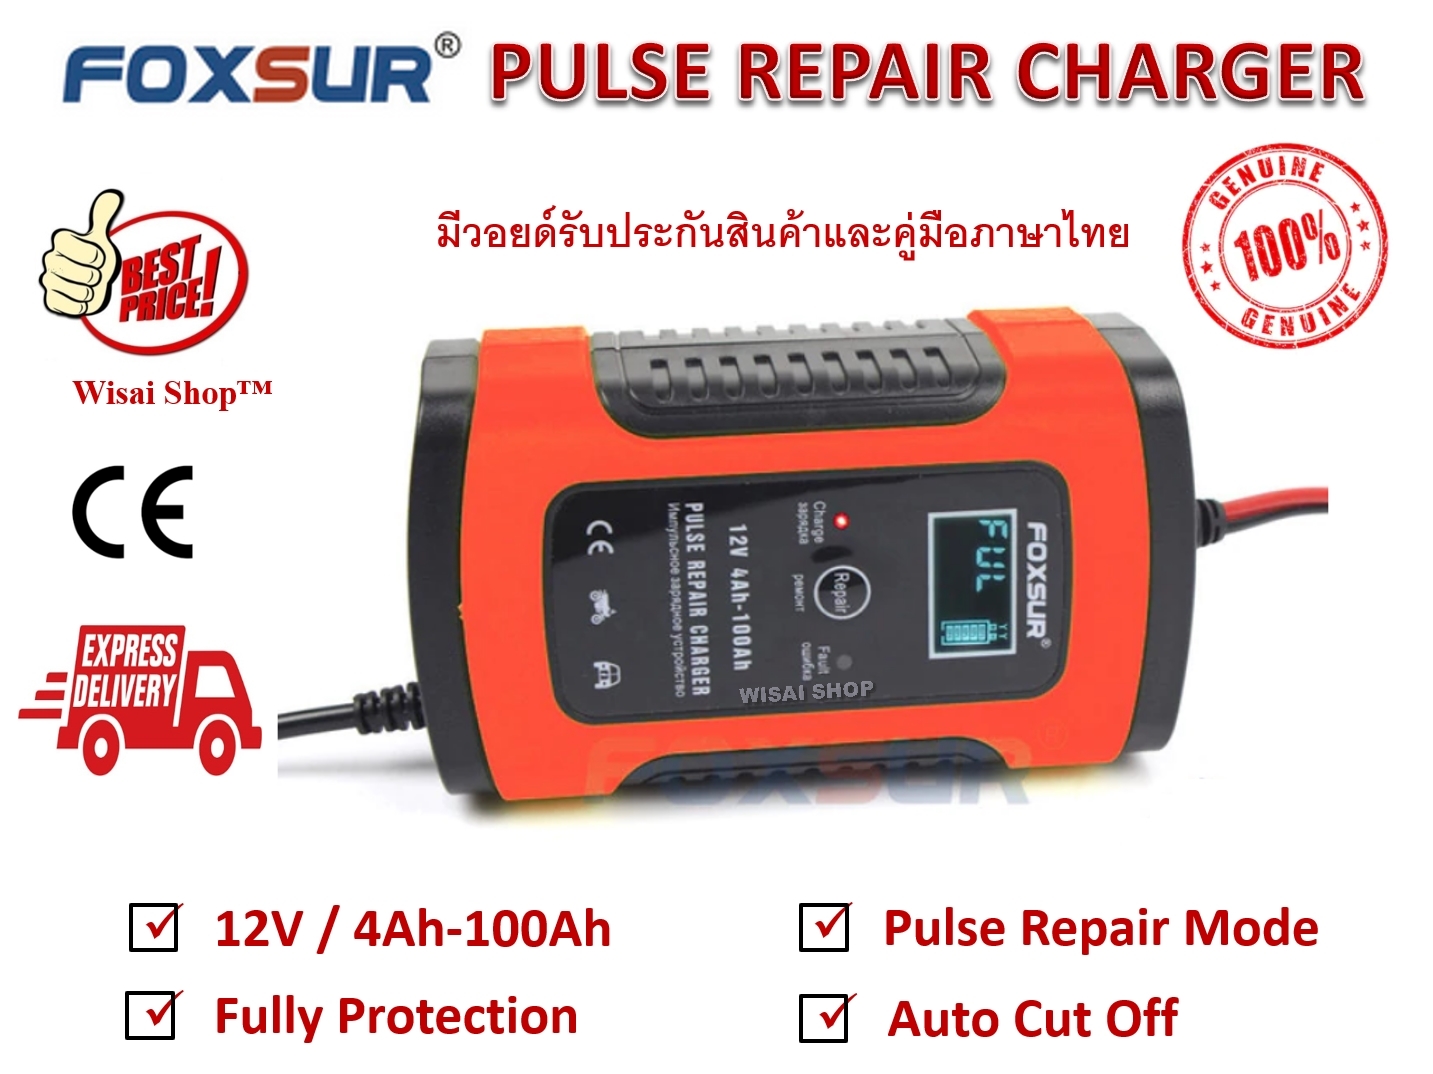 FOXSUR เครื่องชาร์จ 12V อัจฉริยะและซ่อมแบตเตอรี่รถยนต์ Pulse Repair Charger 12V 4-100Ah รุ่น FBC1205D พร้อมคู่มือภาษาไทยและการรับประกันคุณภาพ